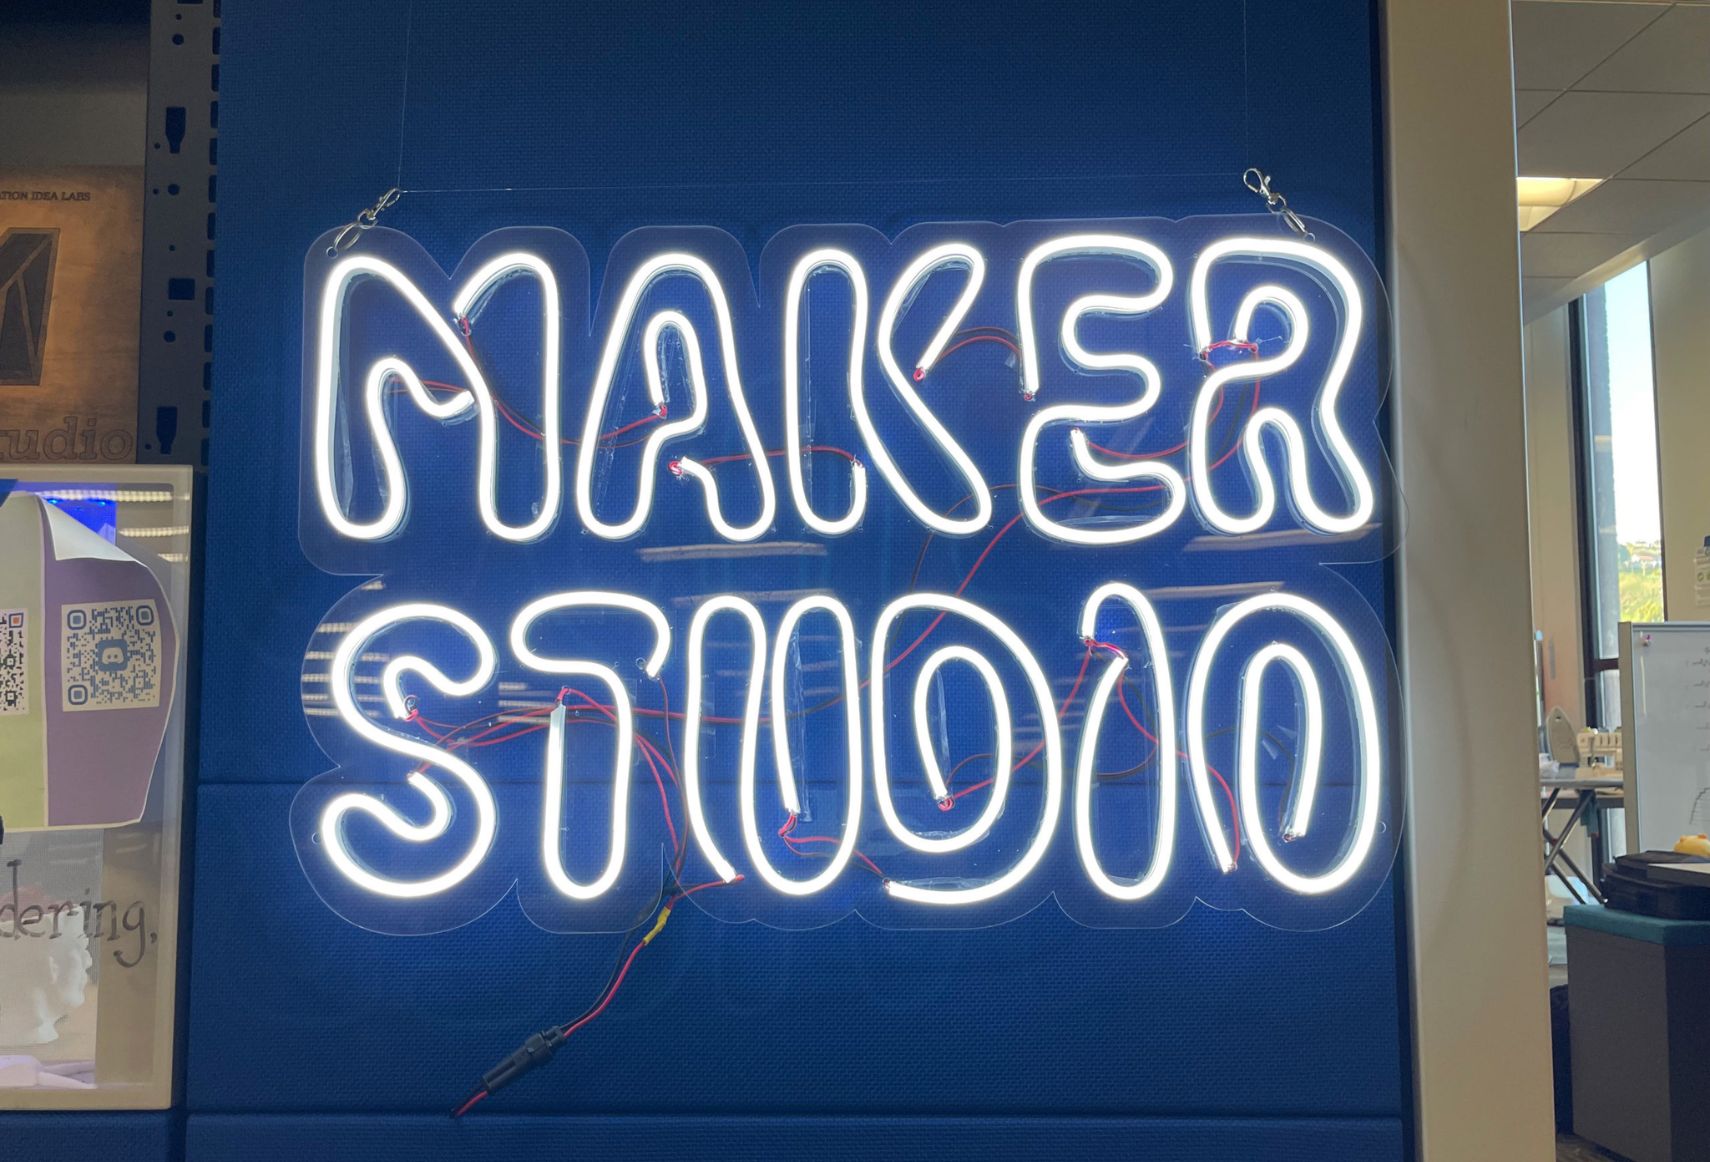 CPP Maker Studio implements Repair Café